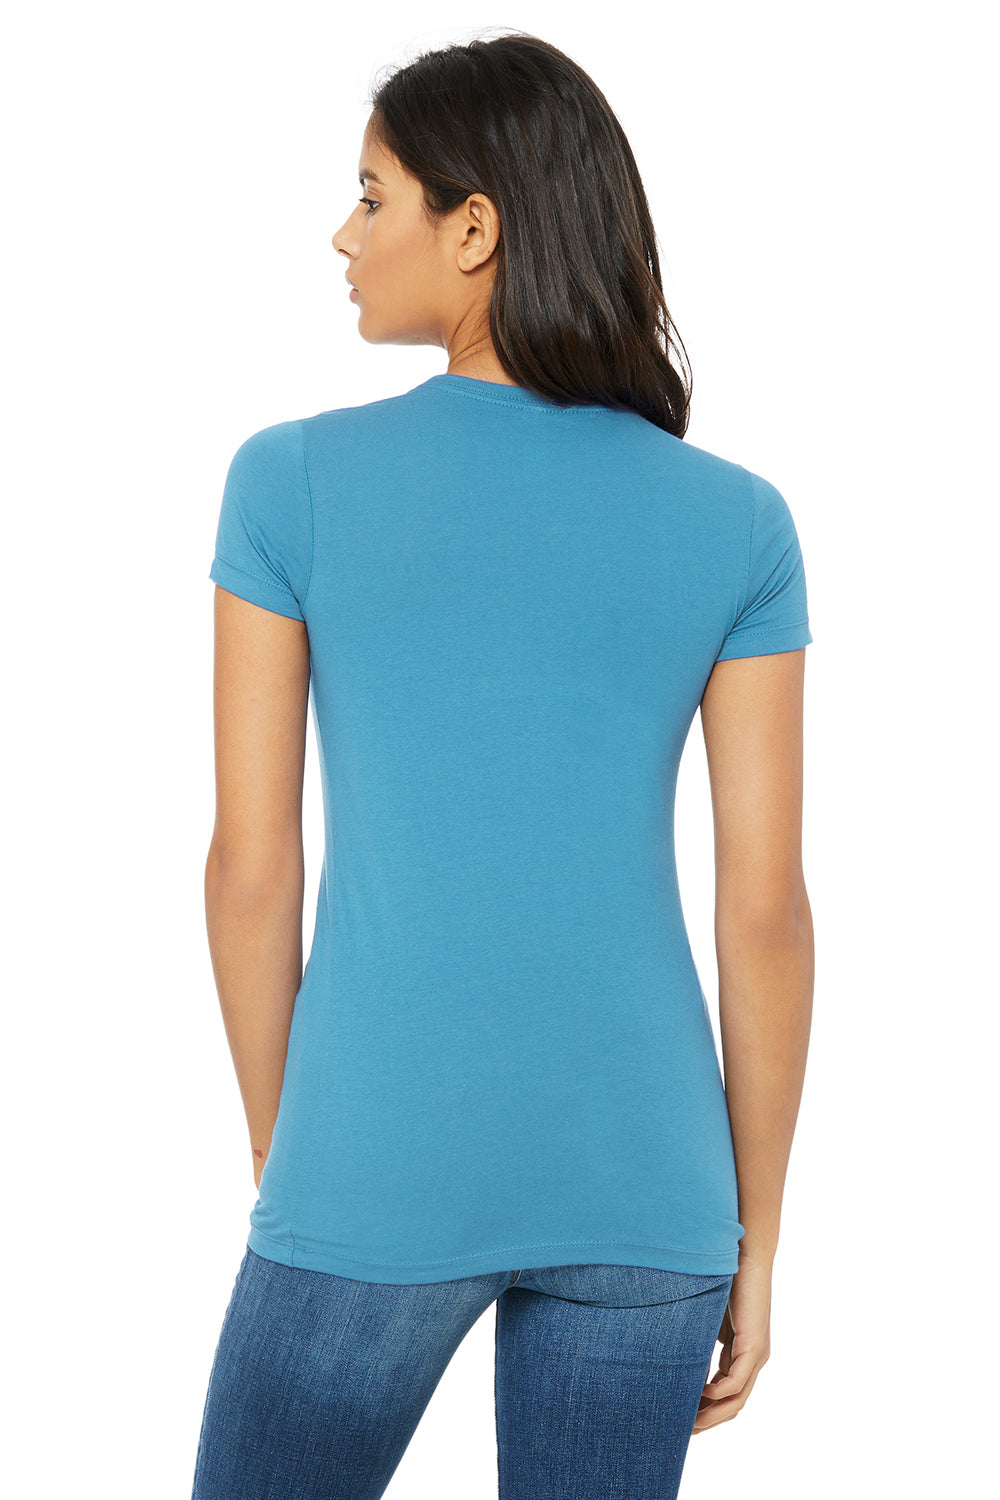 Bella + Canvas 6004 Womens The Favorite Short Sleeve Crewneck T-Shirt Heather Aqua Blue Back